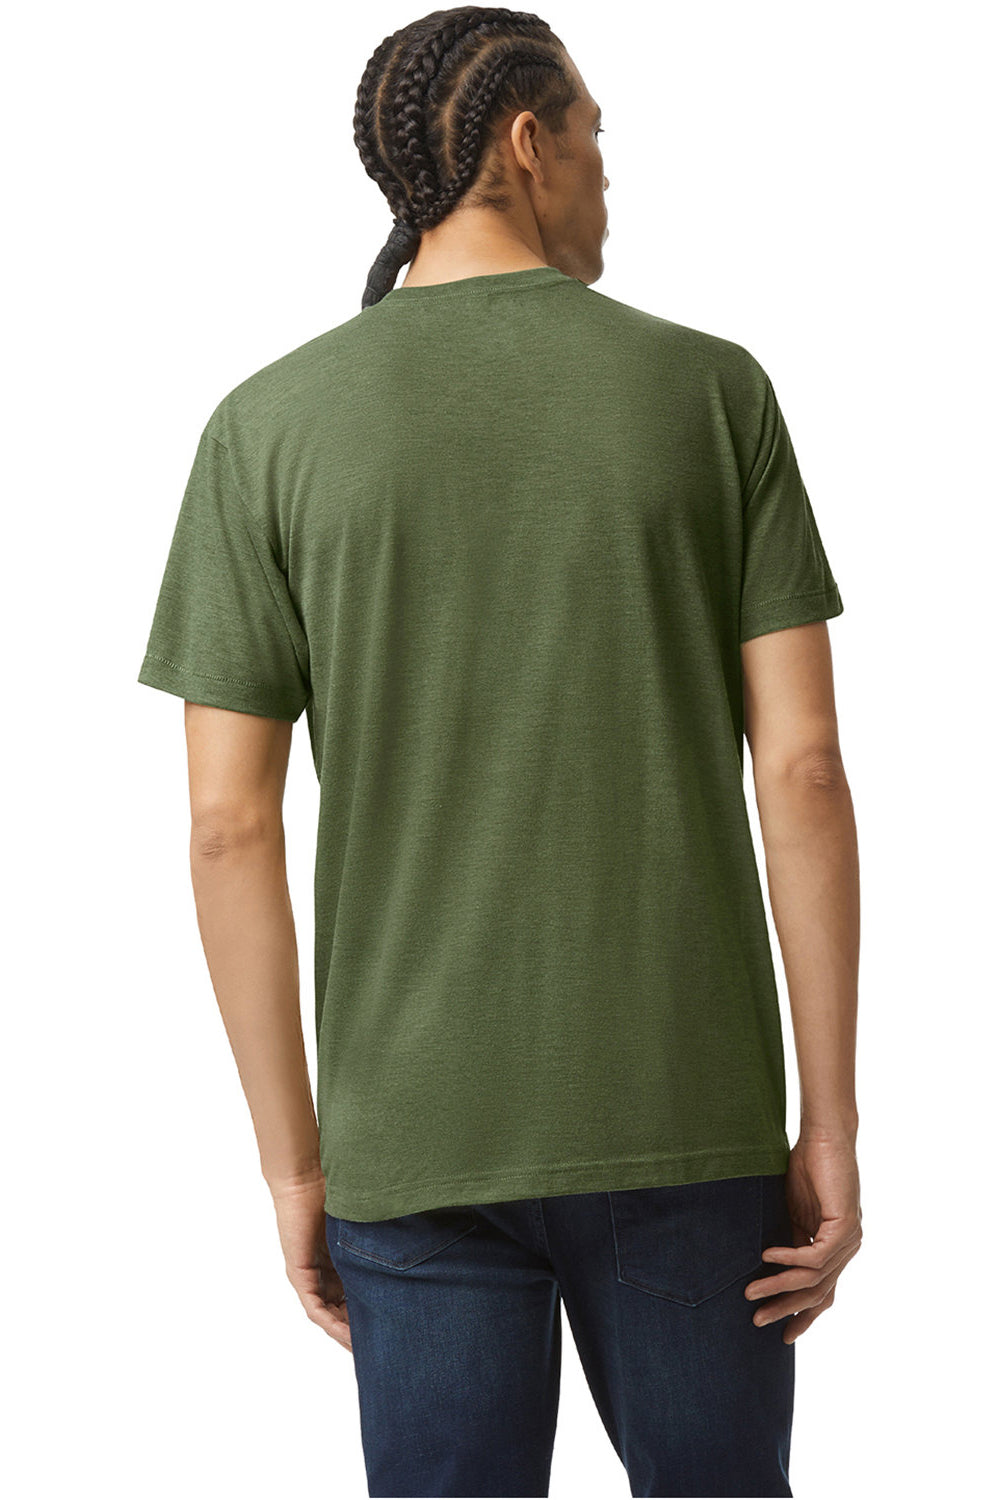 American Apparel TR401 Mens Track Short Sleeve Crewneck T-Shirt Olive Green Model Back